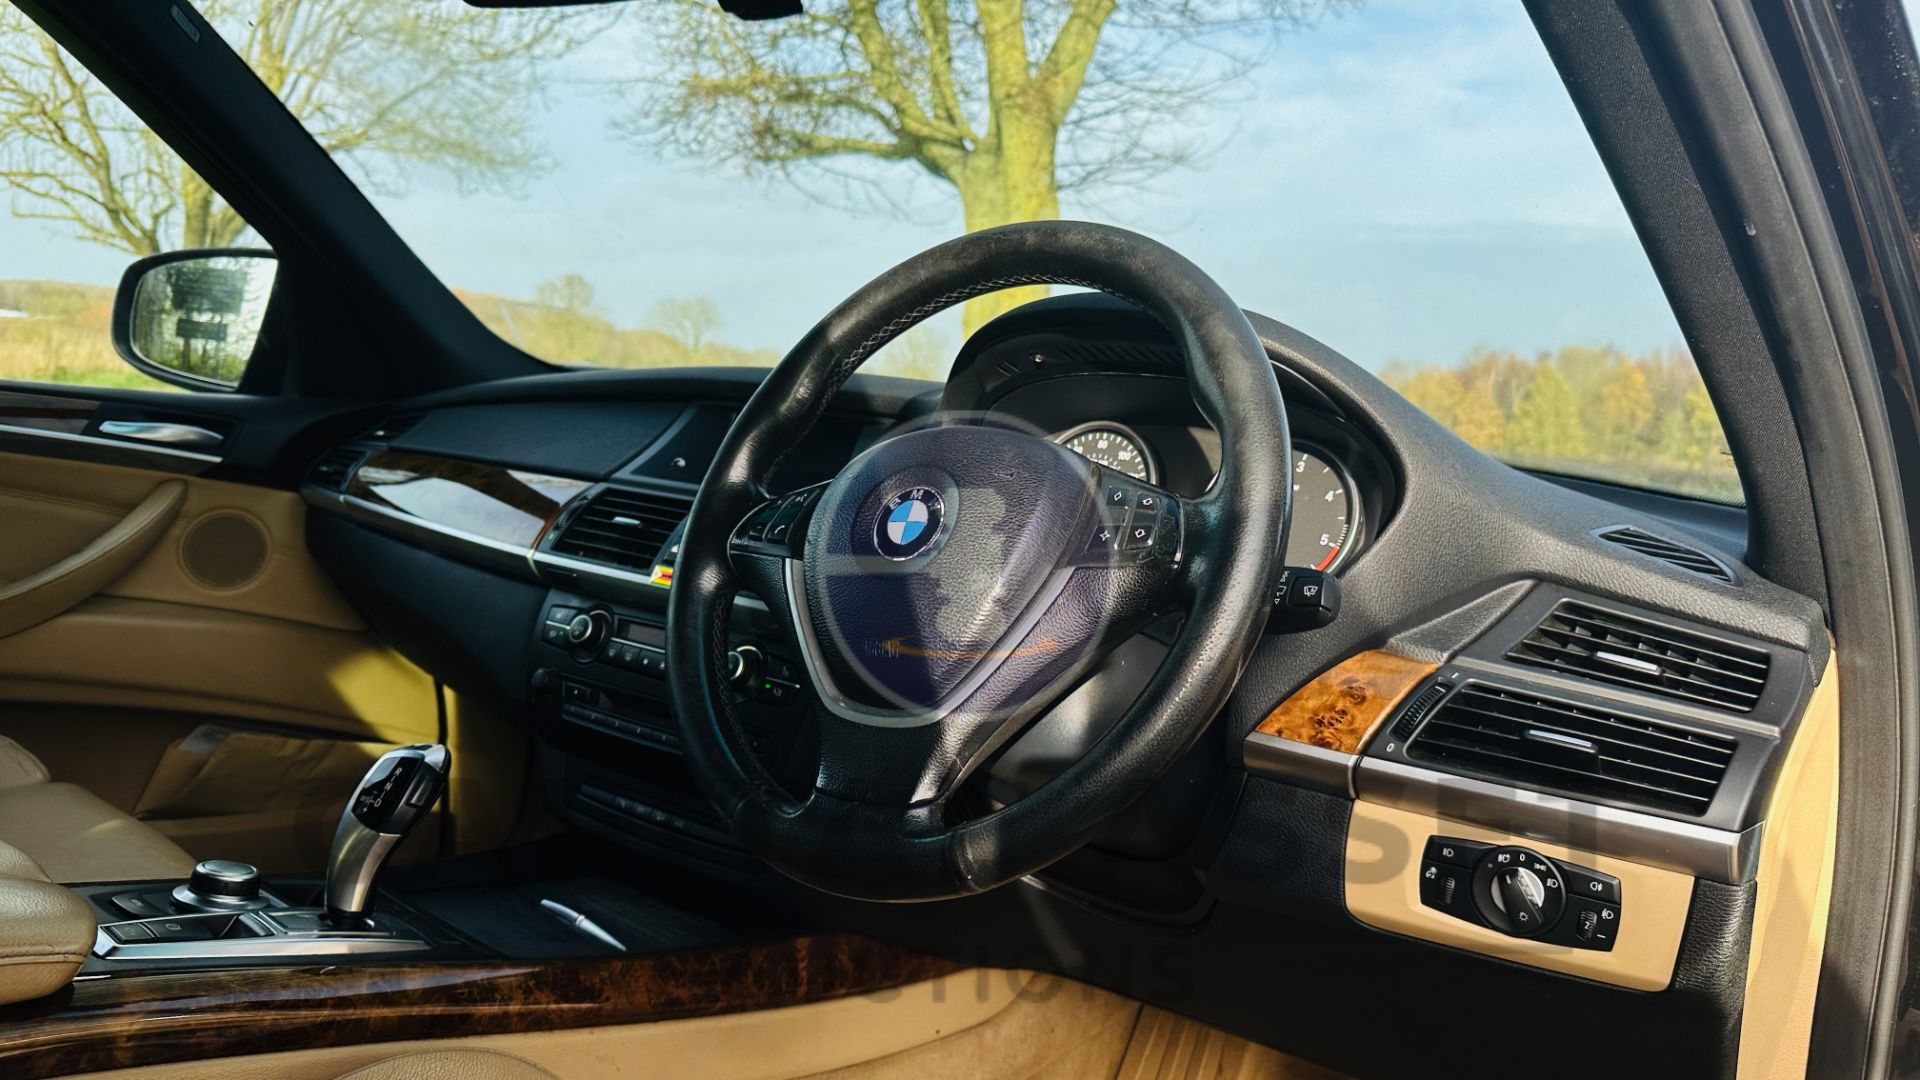 BMW X5 'X-DRIVE 30D' *SPECIAL EDITION* 5 DOOR SUV (2010) 3.0 DIESEL - AUTOMATIC (NO VAT) *HUGE SPEC* - Image 34 of 45